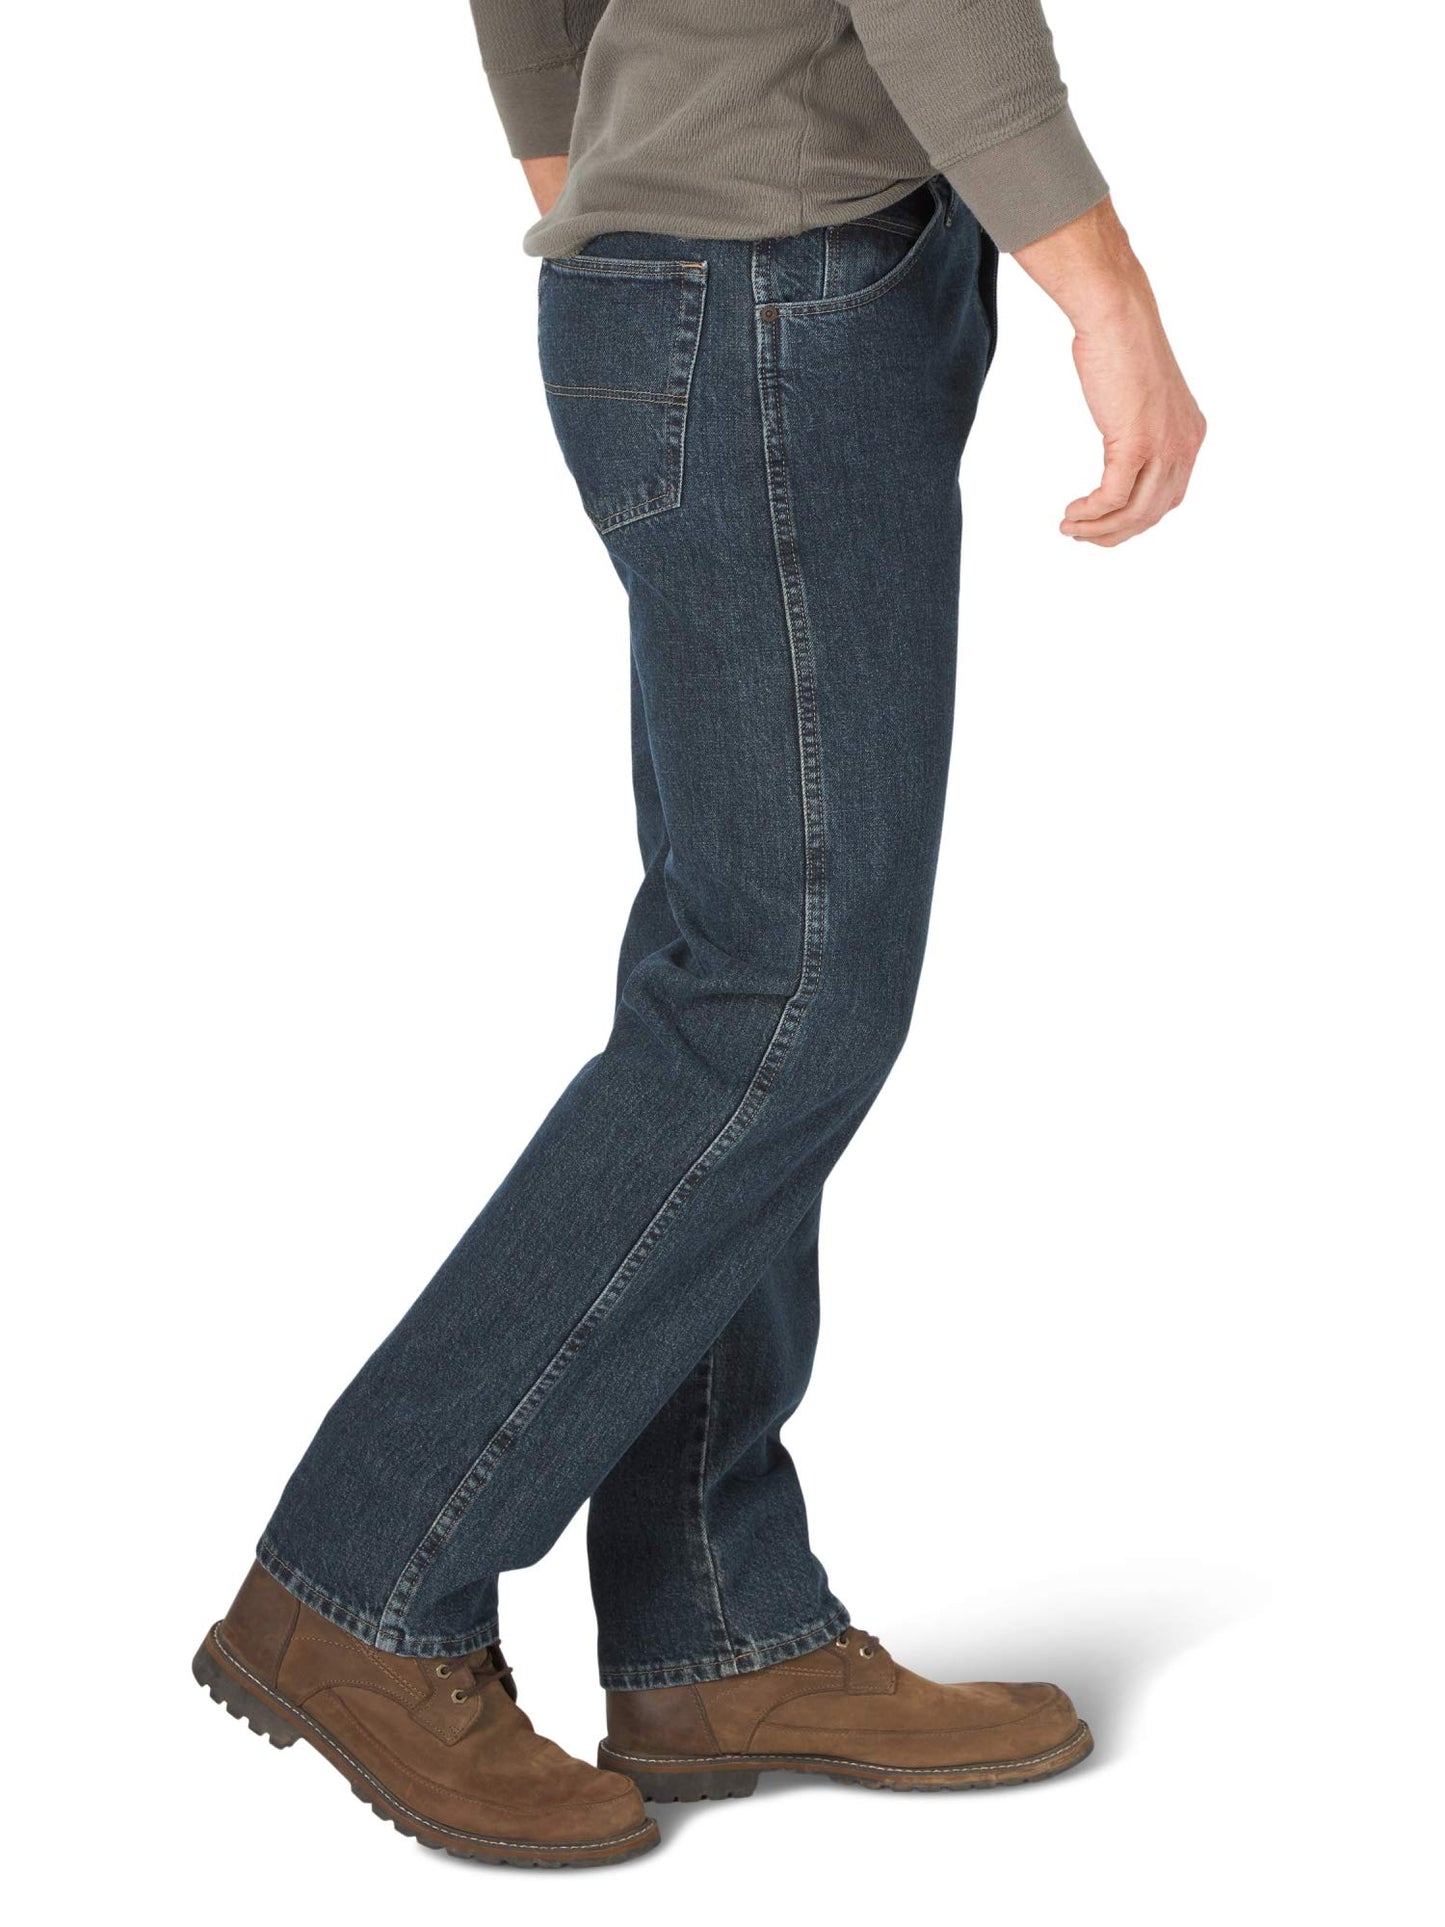 Wrangler Authentics Men's Classic 5-Pocket Regular Fit Cotton Jean, Storm, 34W x 32L